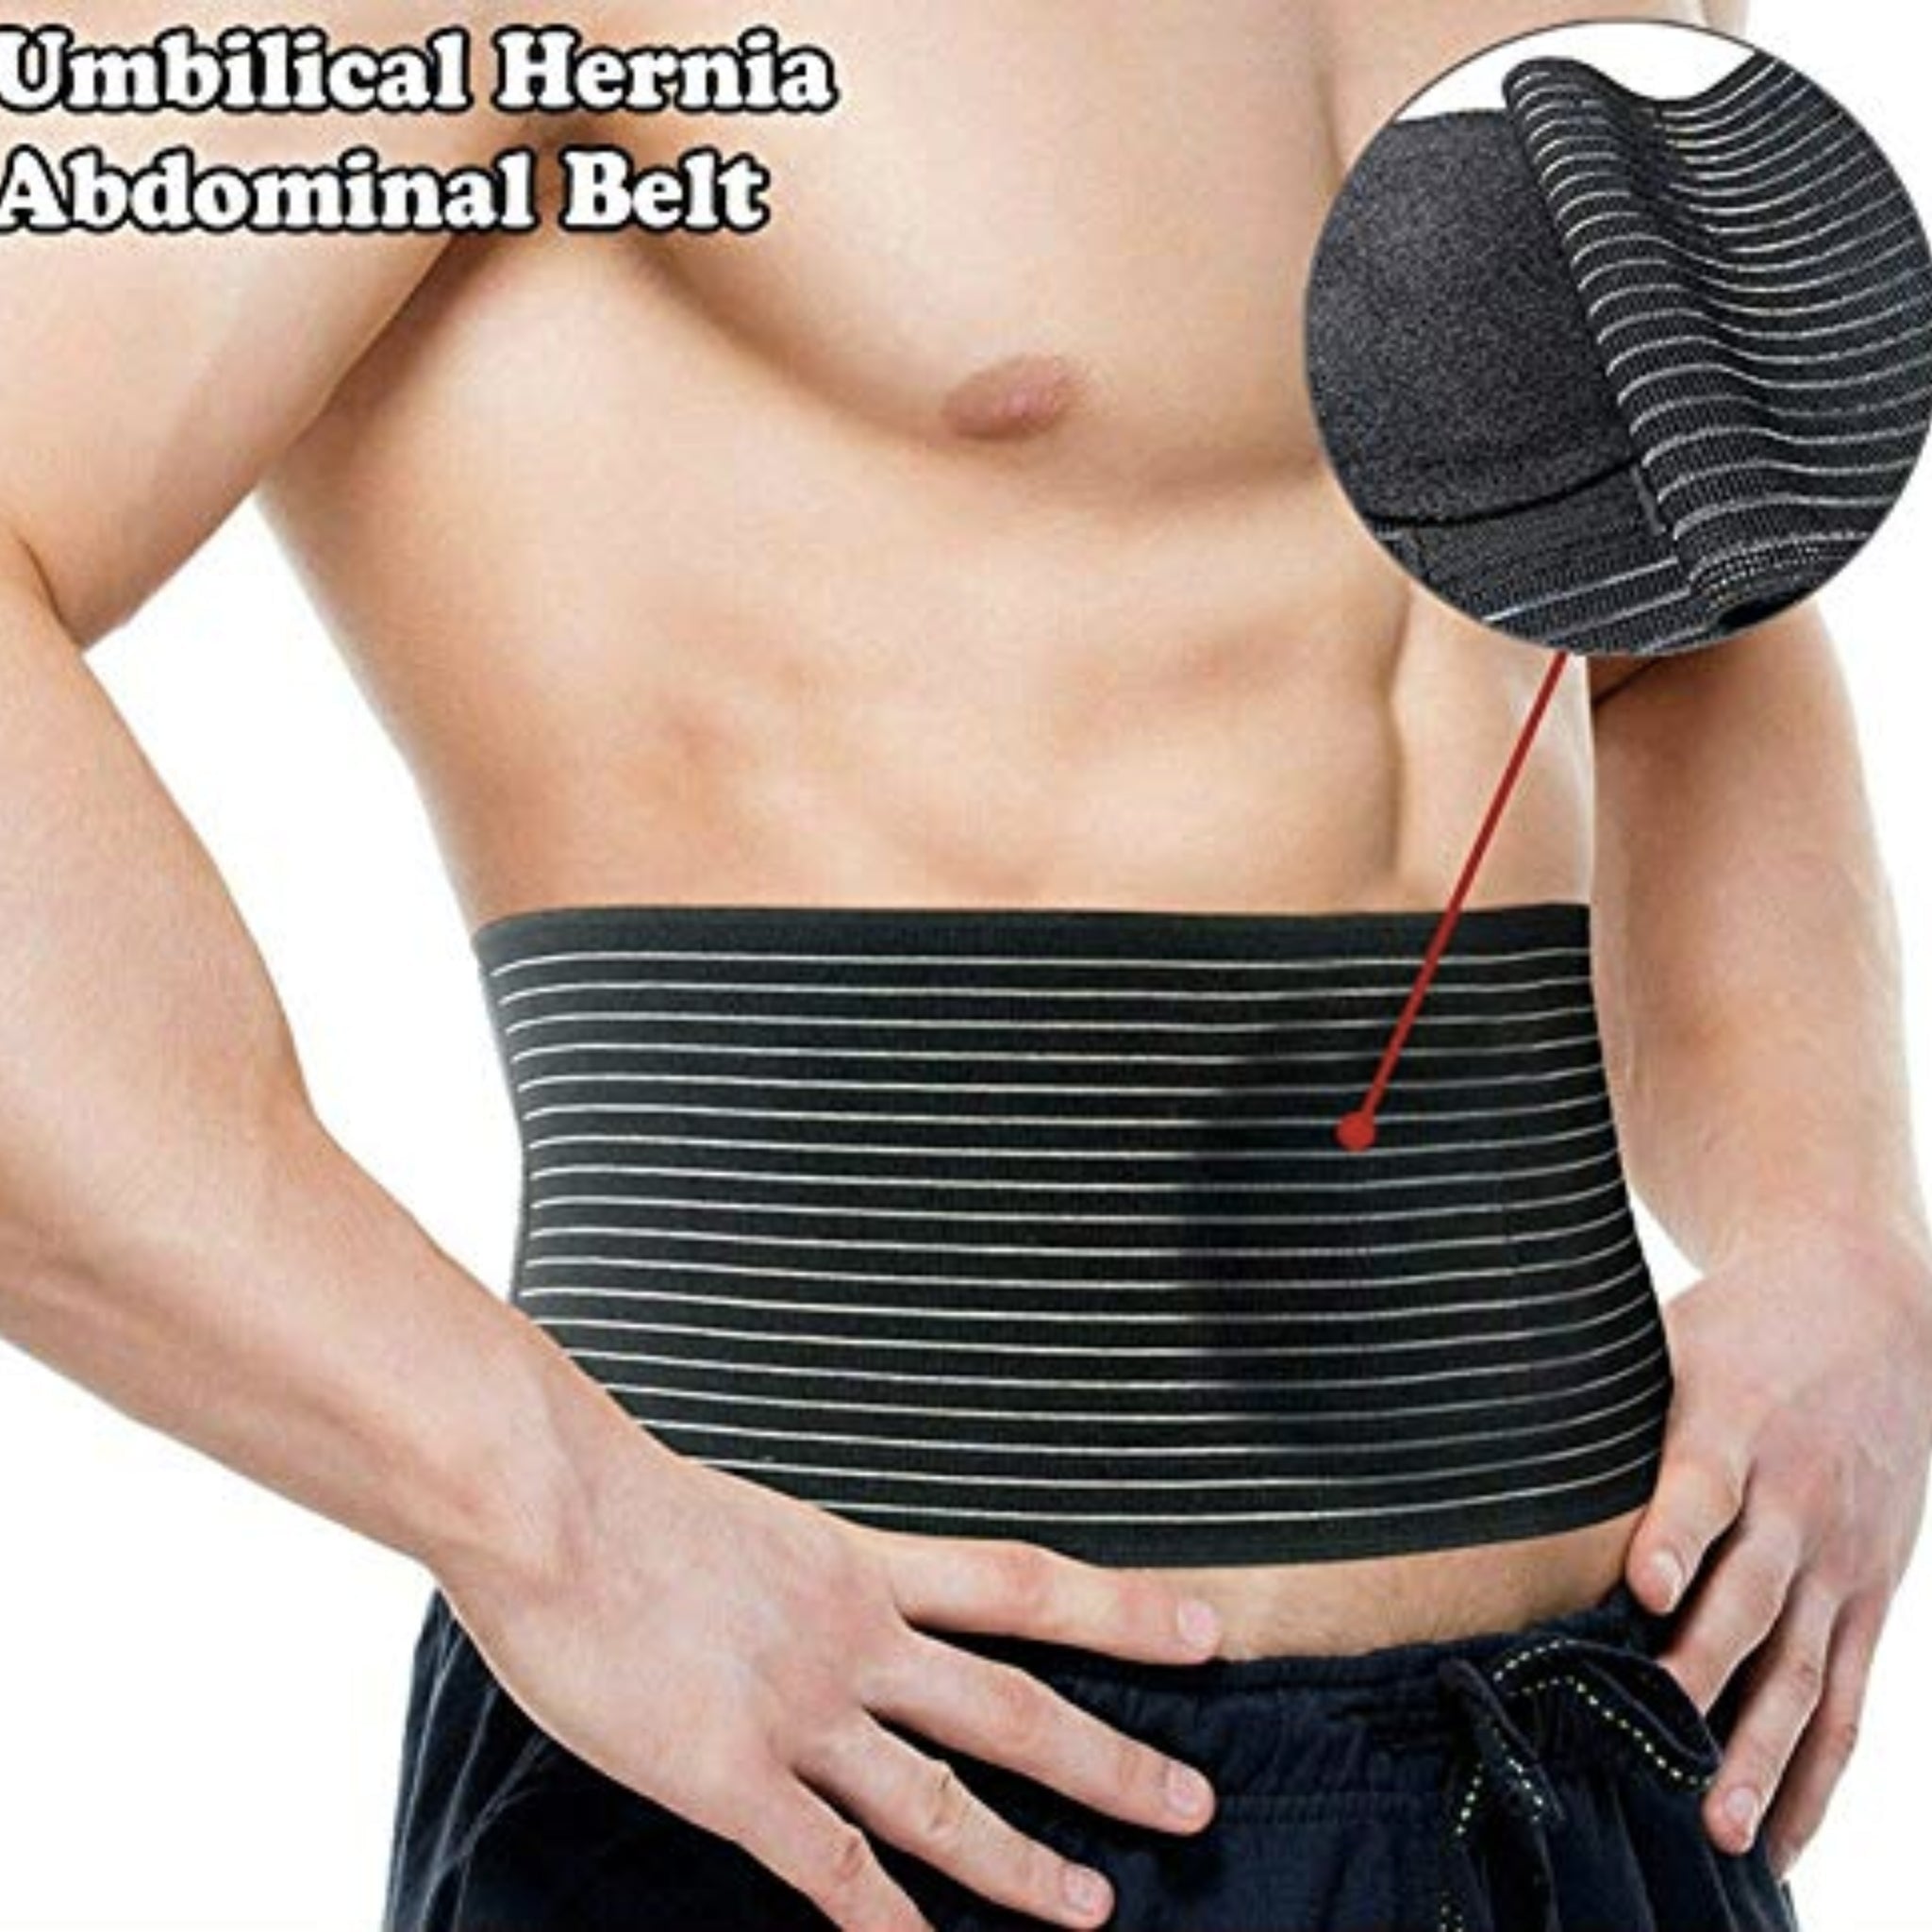 Hernia Belt for Women and Men, Hernia Aid